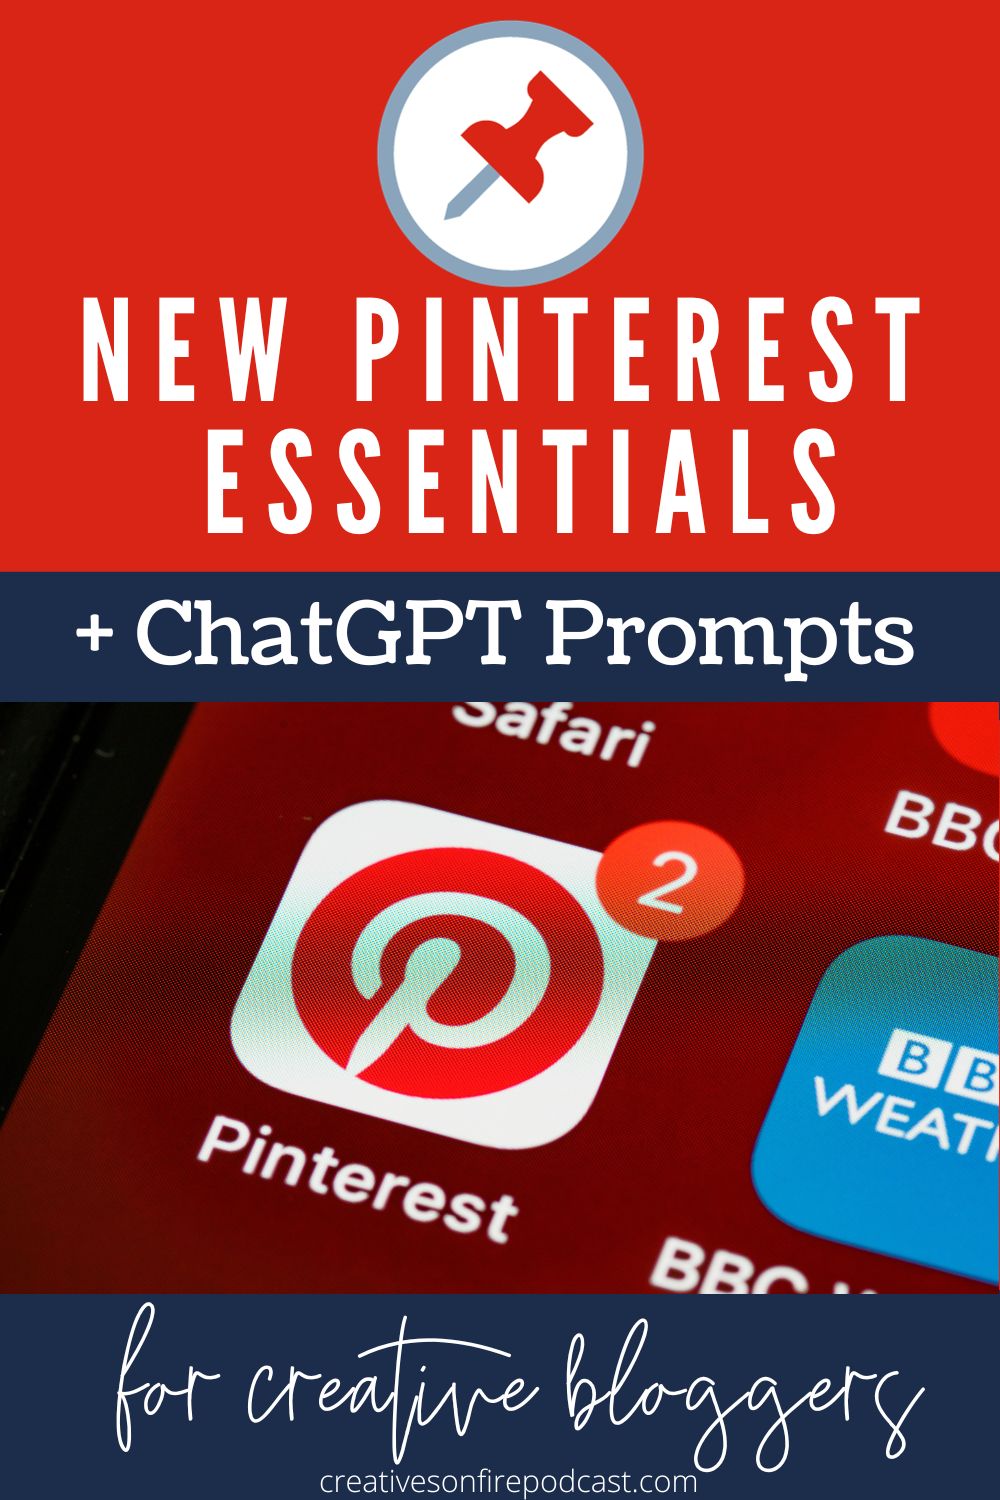 Pinterest Essentials + Pinterest ChatGPT Prompts